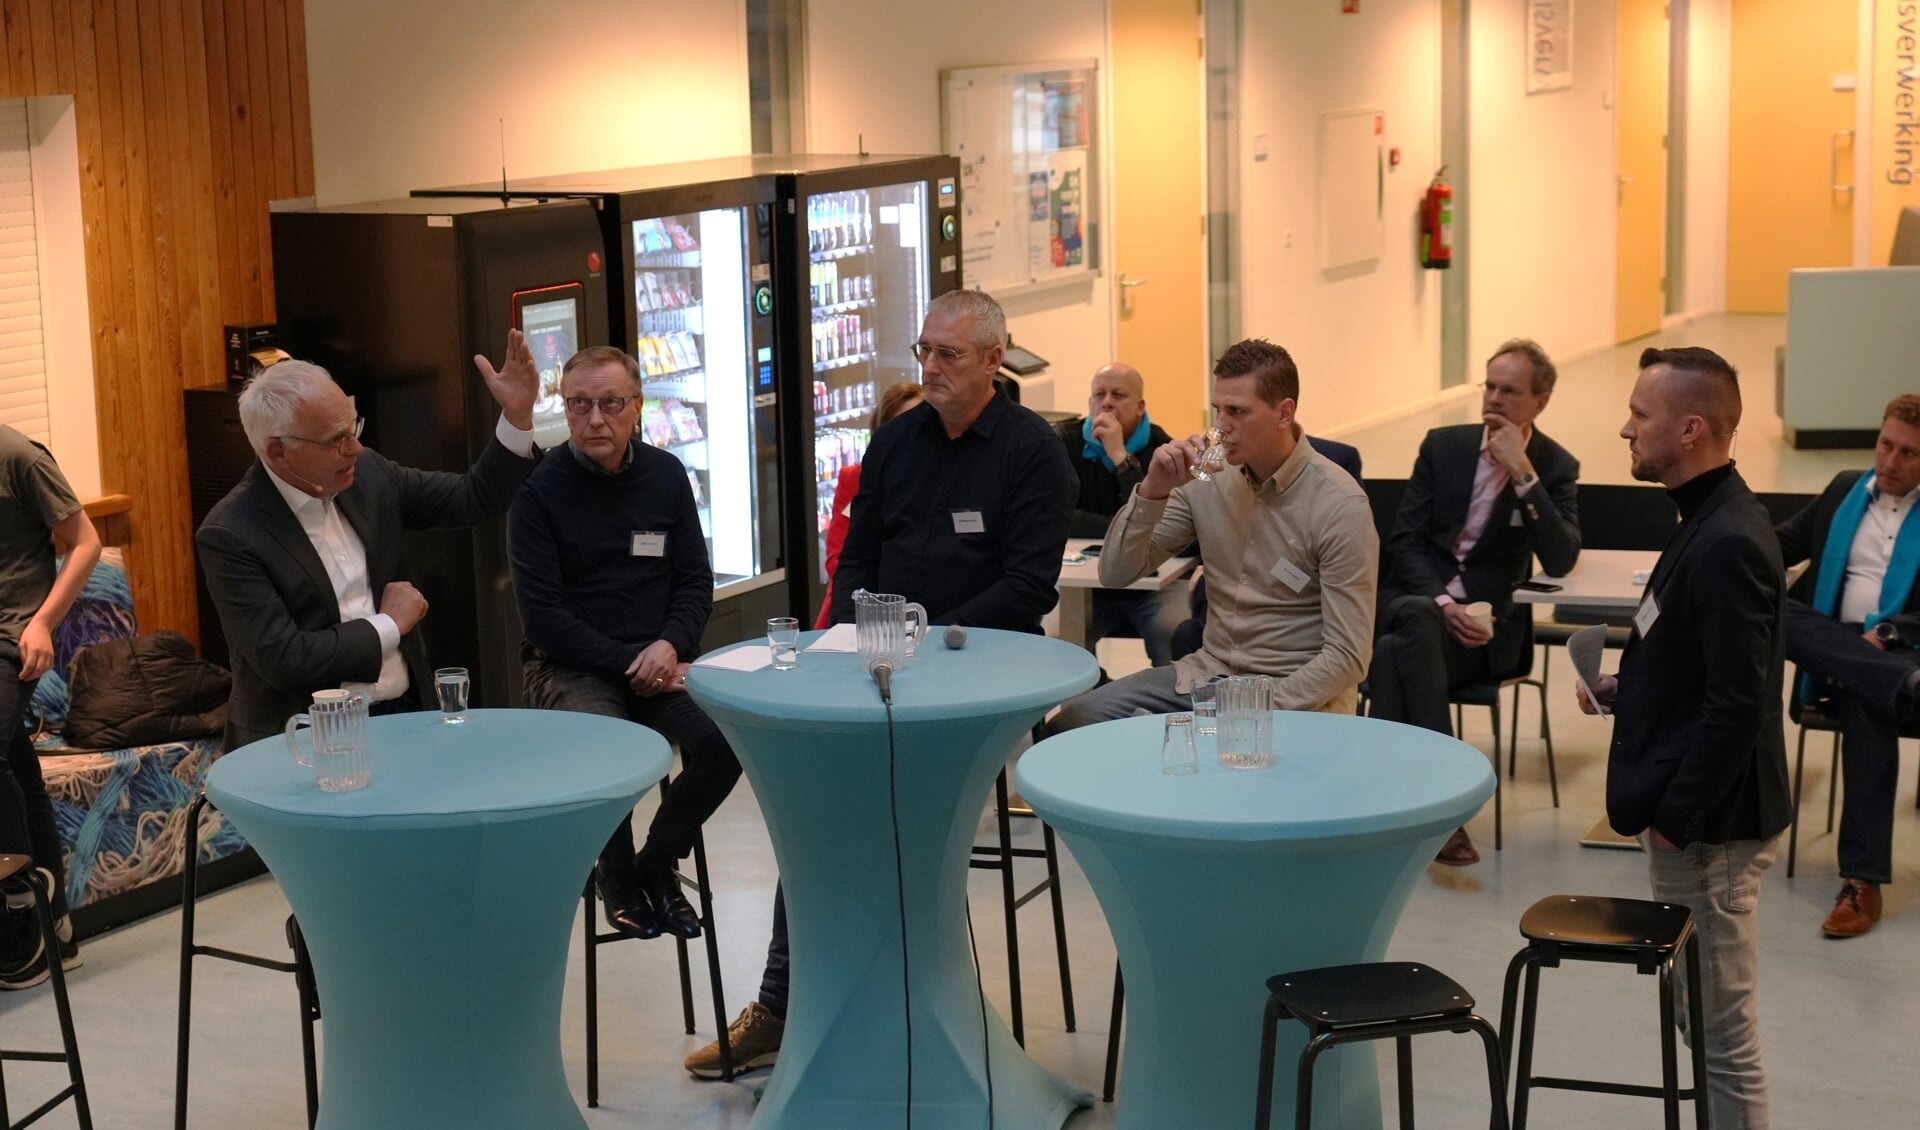 Op de foto vlnr: minister Piet Adema, Jacob Kramer, Hendrik Romkes, Willem Snoek en gespreksleider Cornelis Vlot.